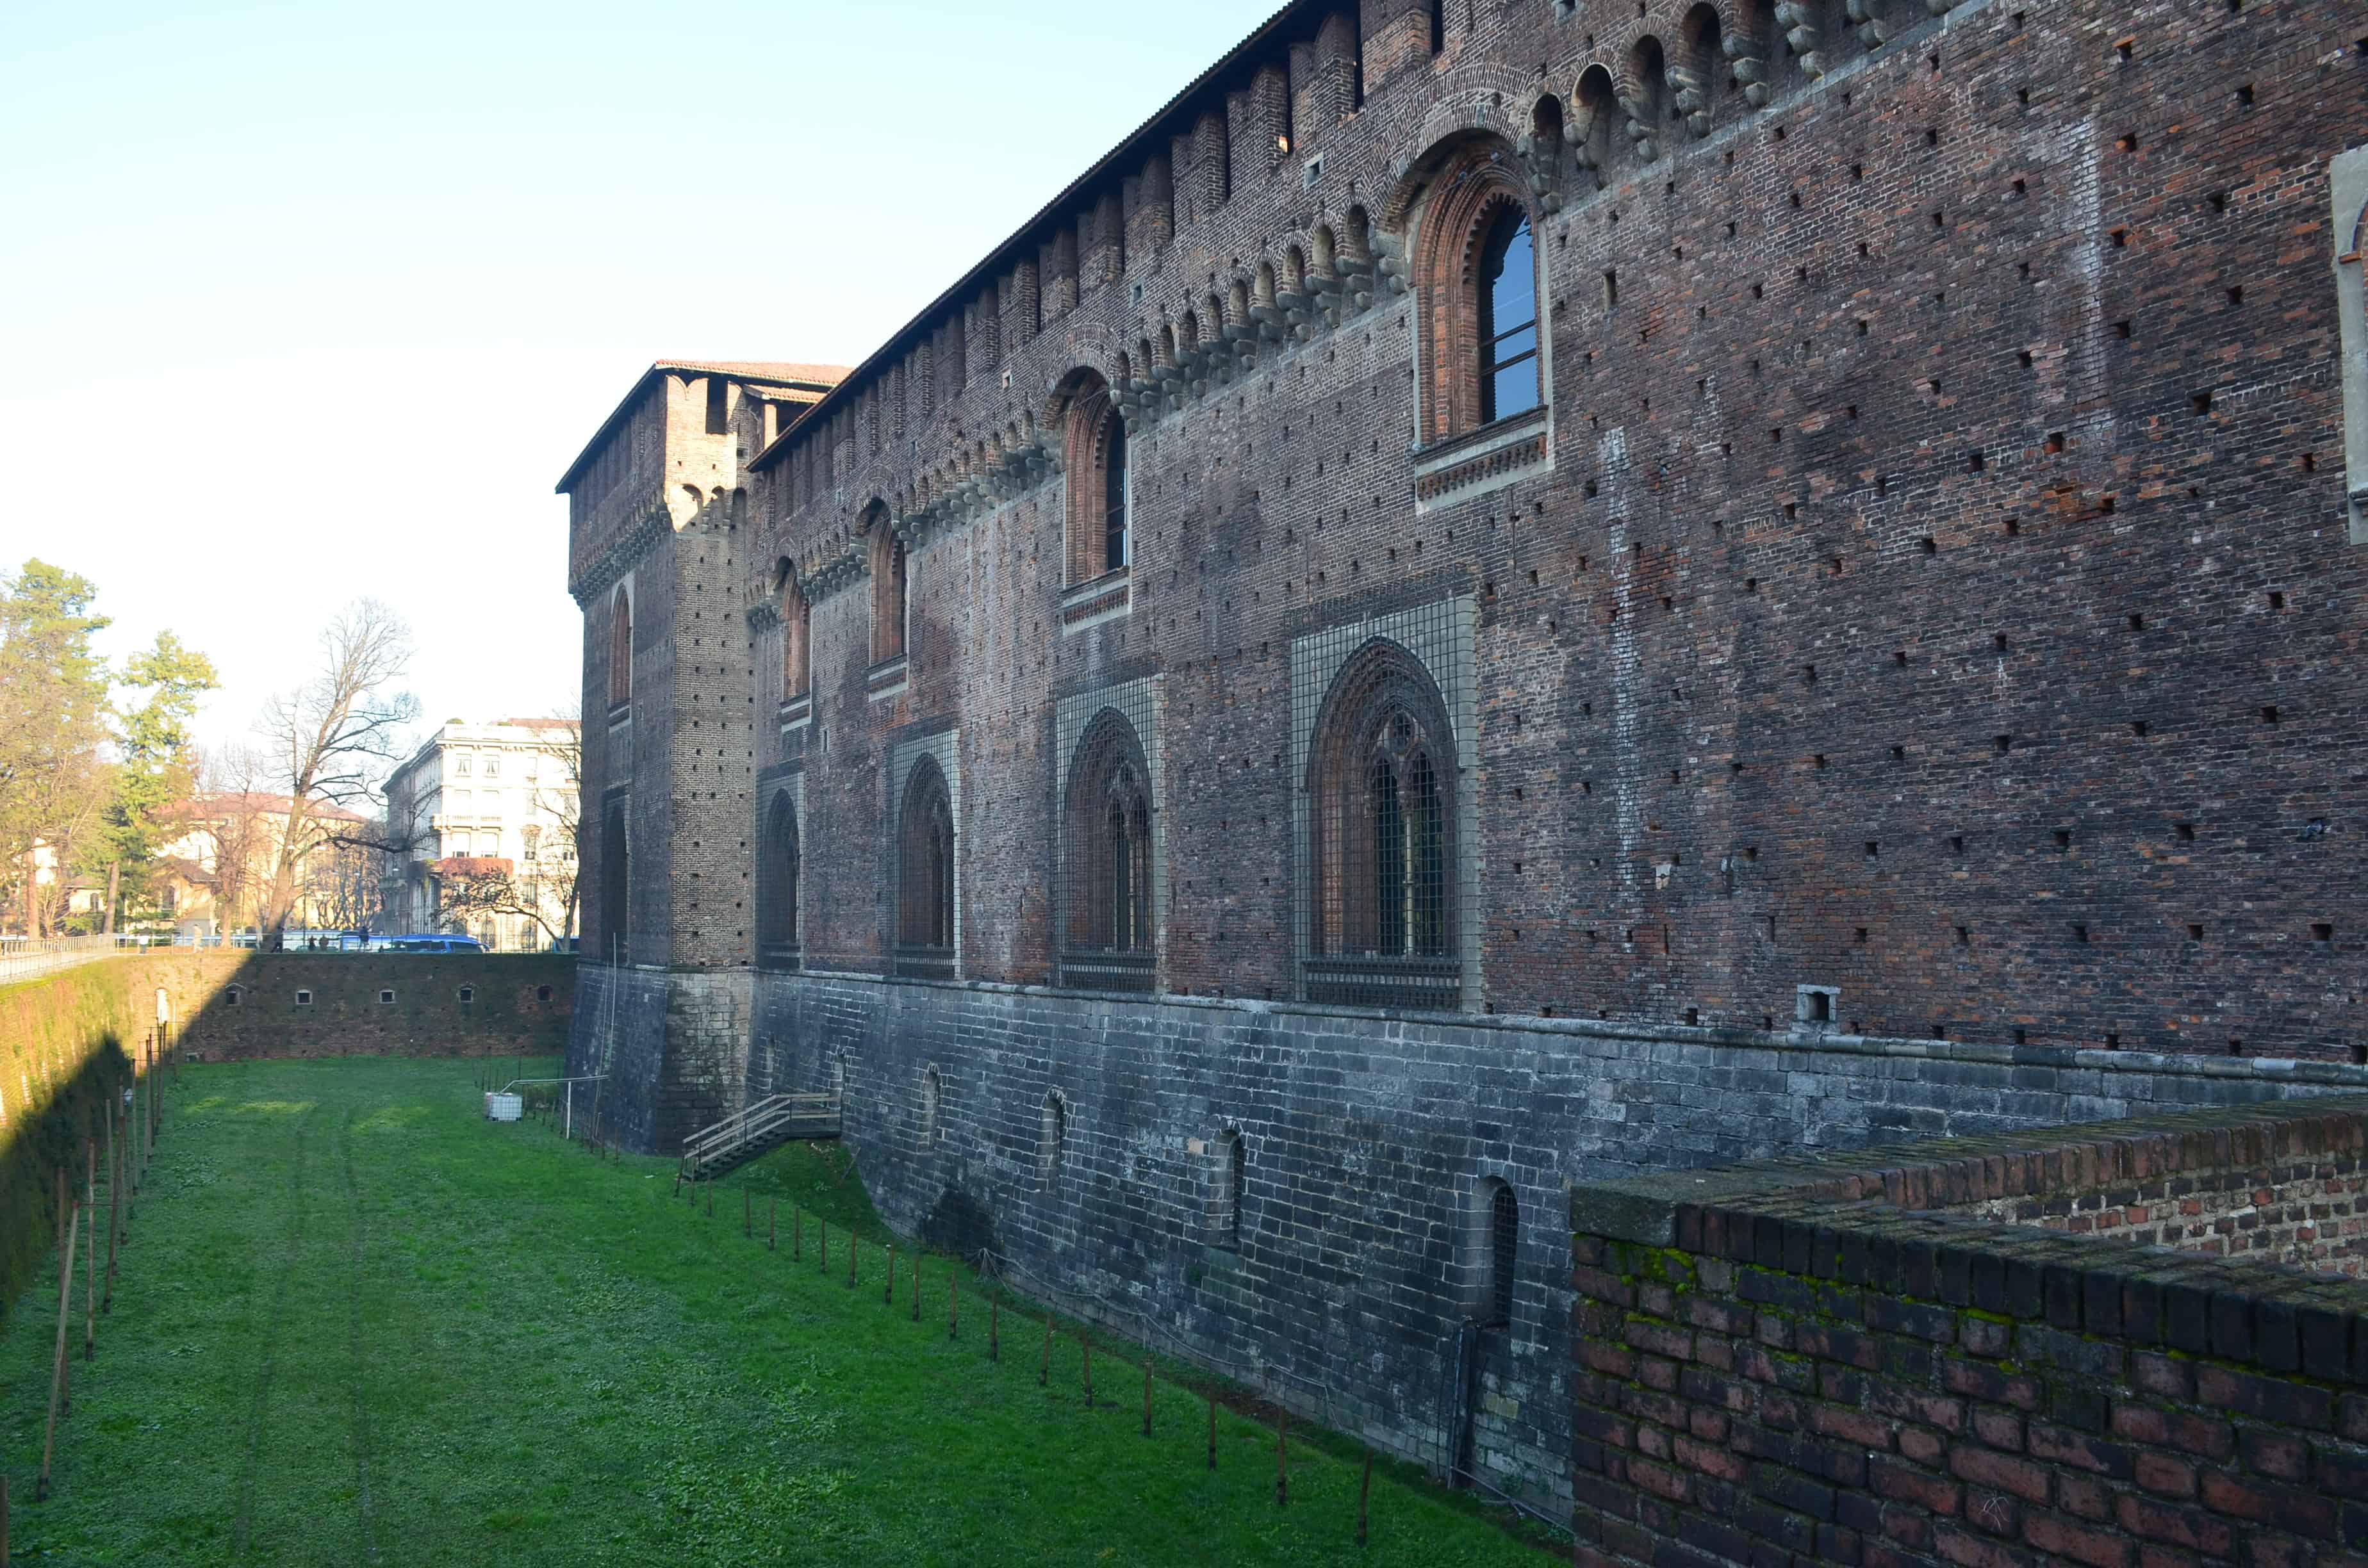 Looking towards Castellana Tower at Sforza Castle in Milan, Italy